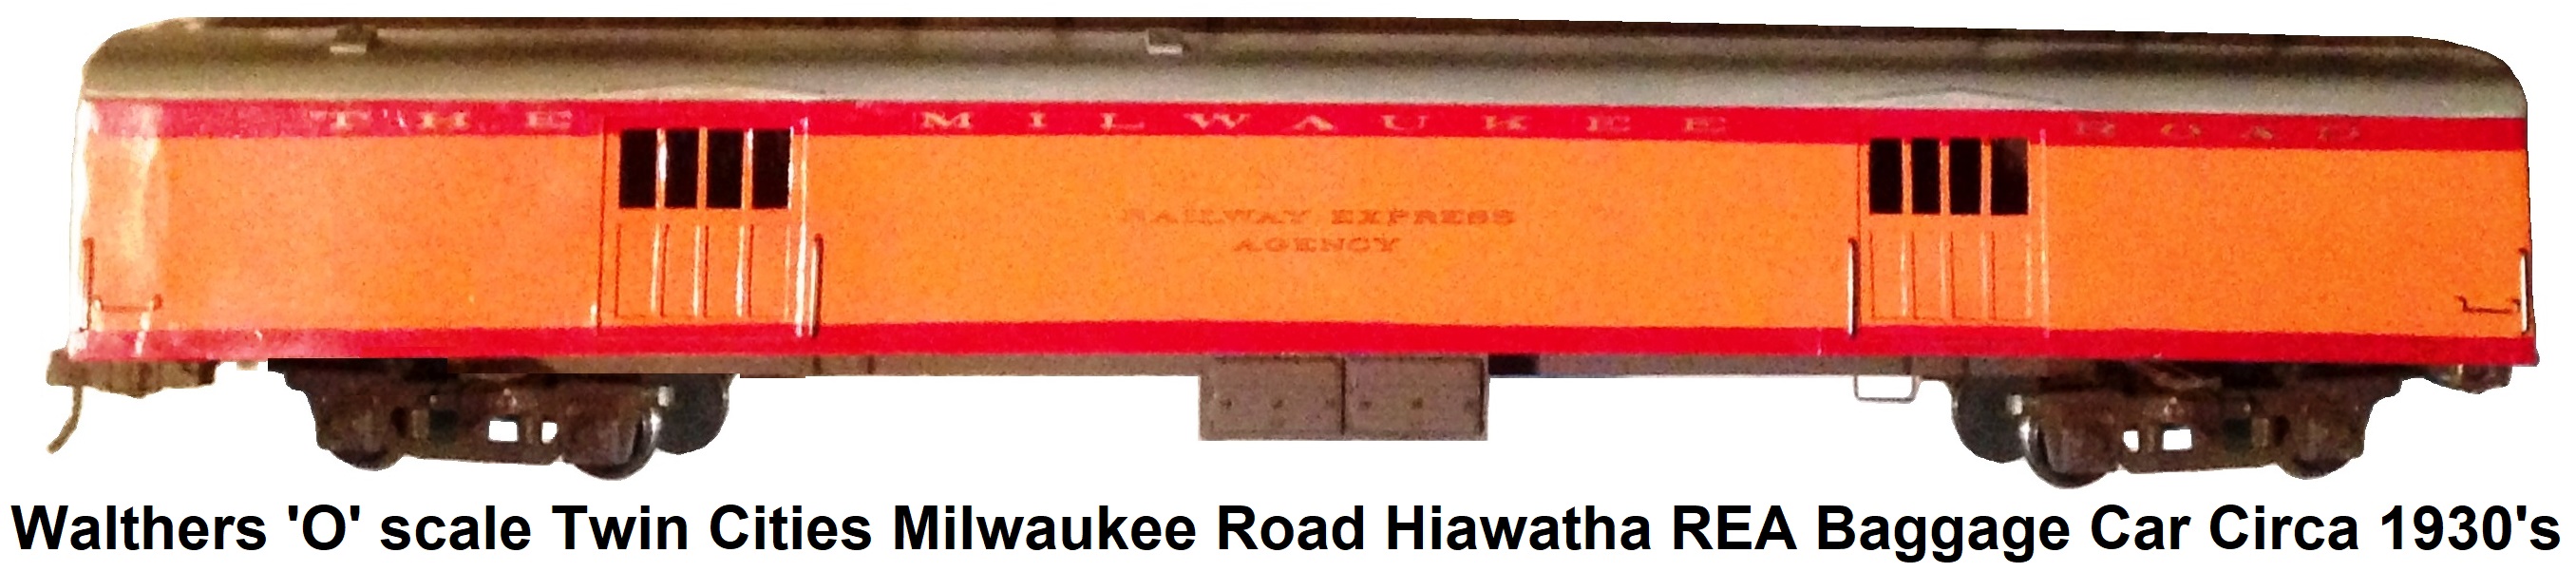 Walthers 'O' scale Twin Cities Milwaukee Road Hiawatha REA Baggage Car circa 1936